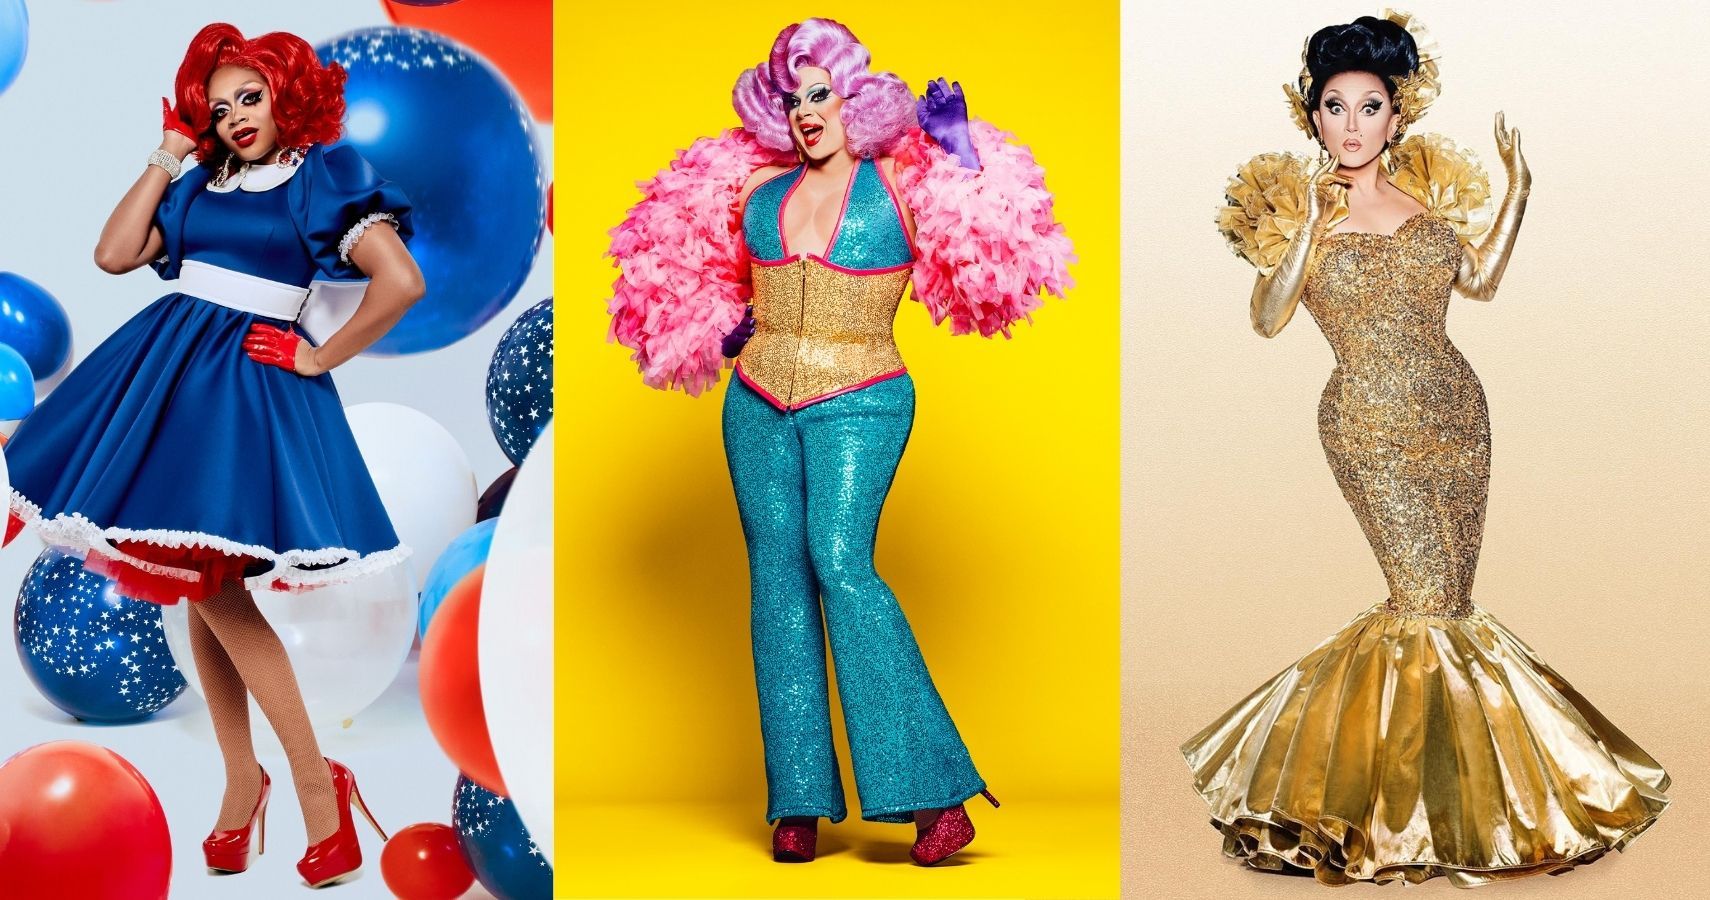 Split image: Heidi N Closet, Nina Flowers, and Ben DeLaCreme in cast photos for RuPaul's Drag Race